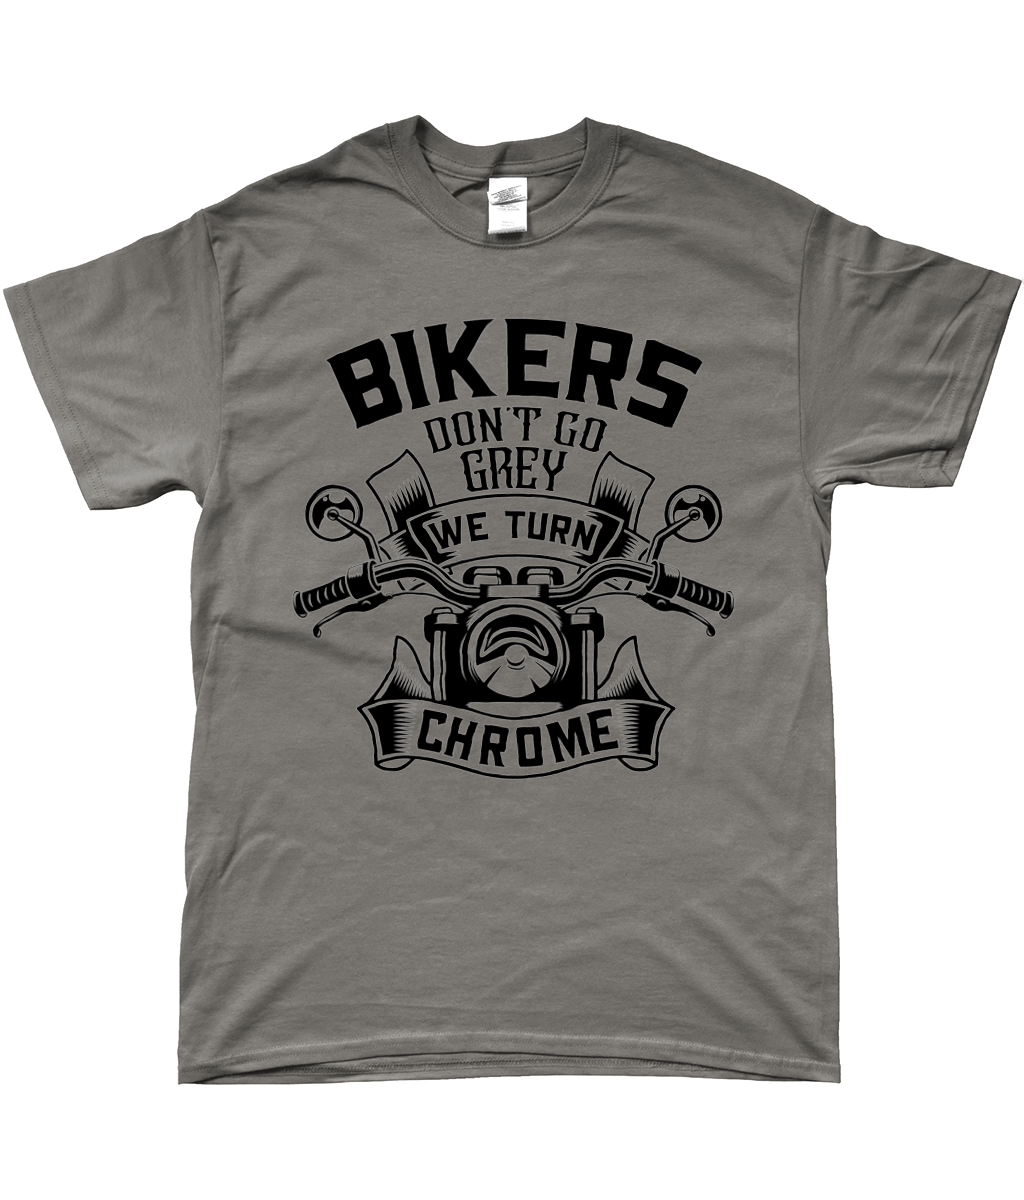 Bikers Don't Go Grey Men's T-Shirt